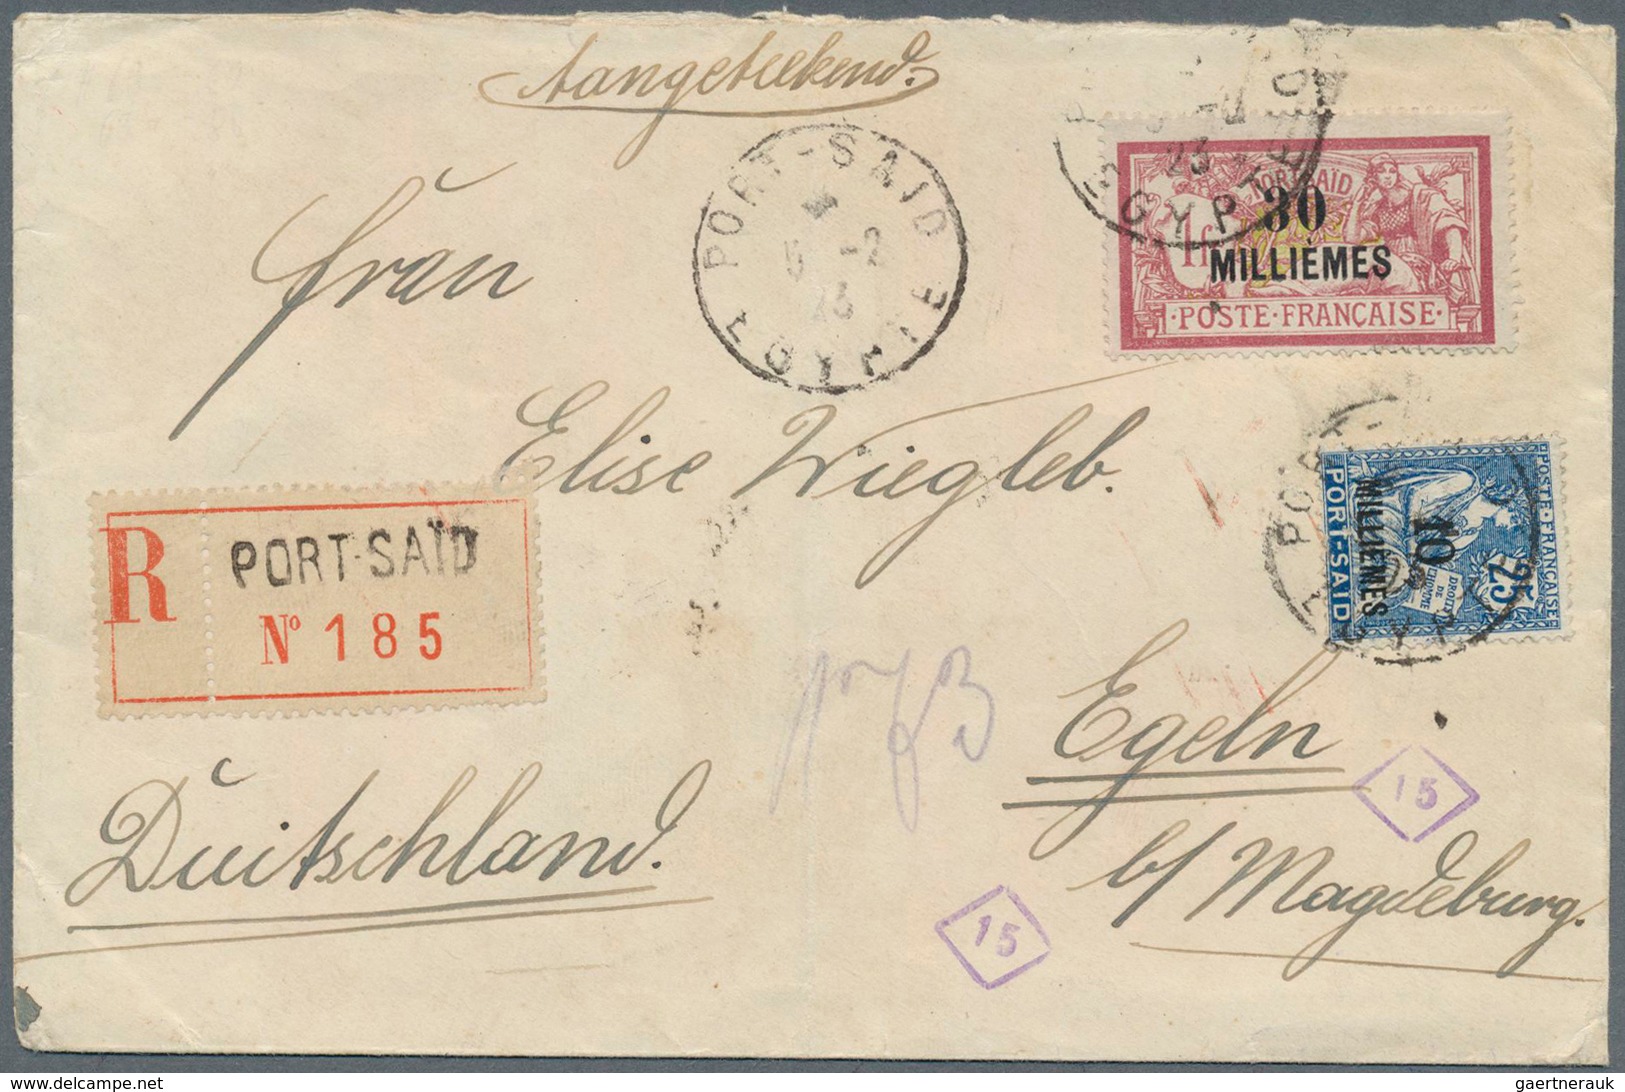 26497 Französische Post in Ägypten - Alexandria: 1812/1927, French P.O. Alexandria/Port Said, mint and use